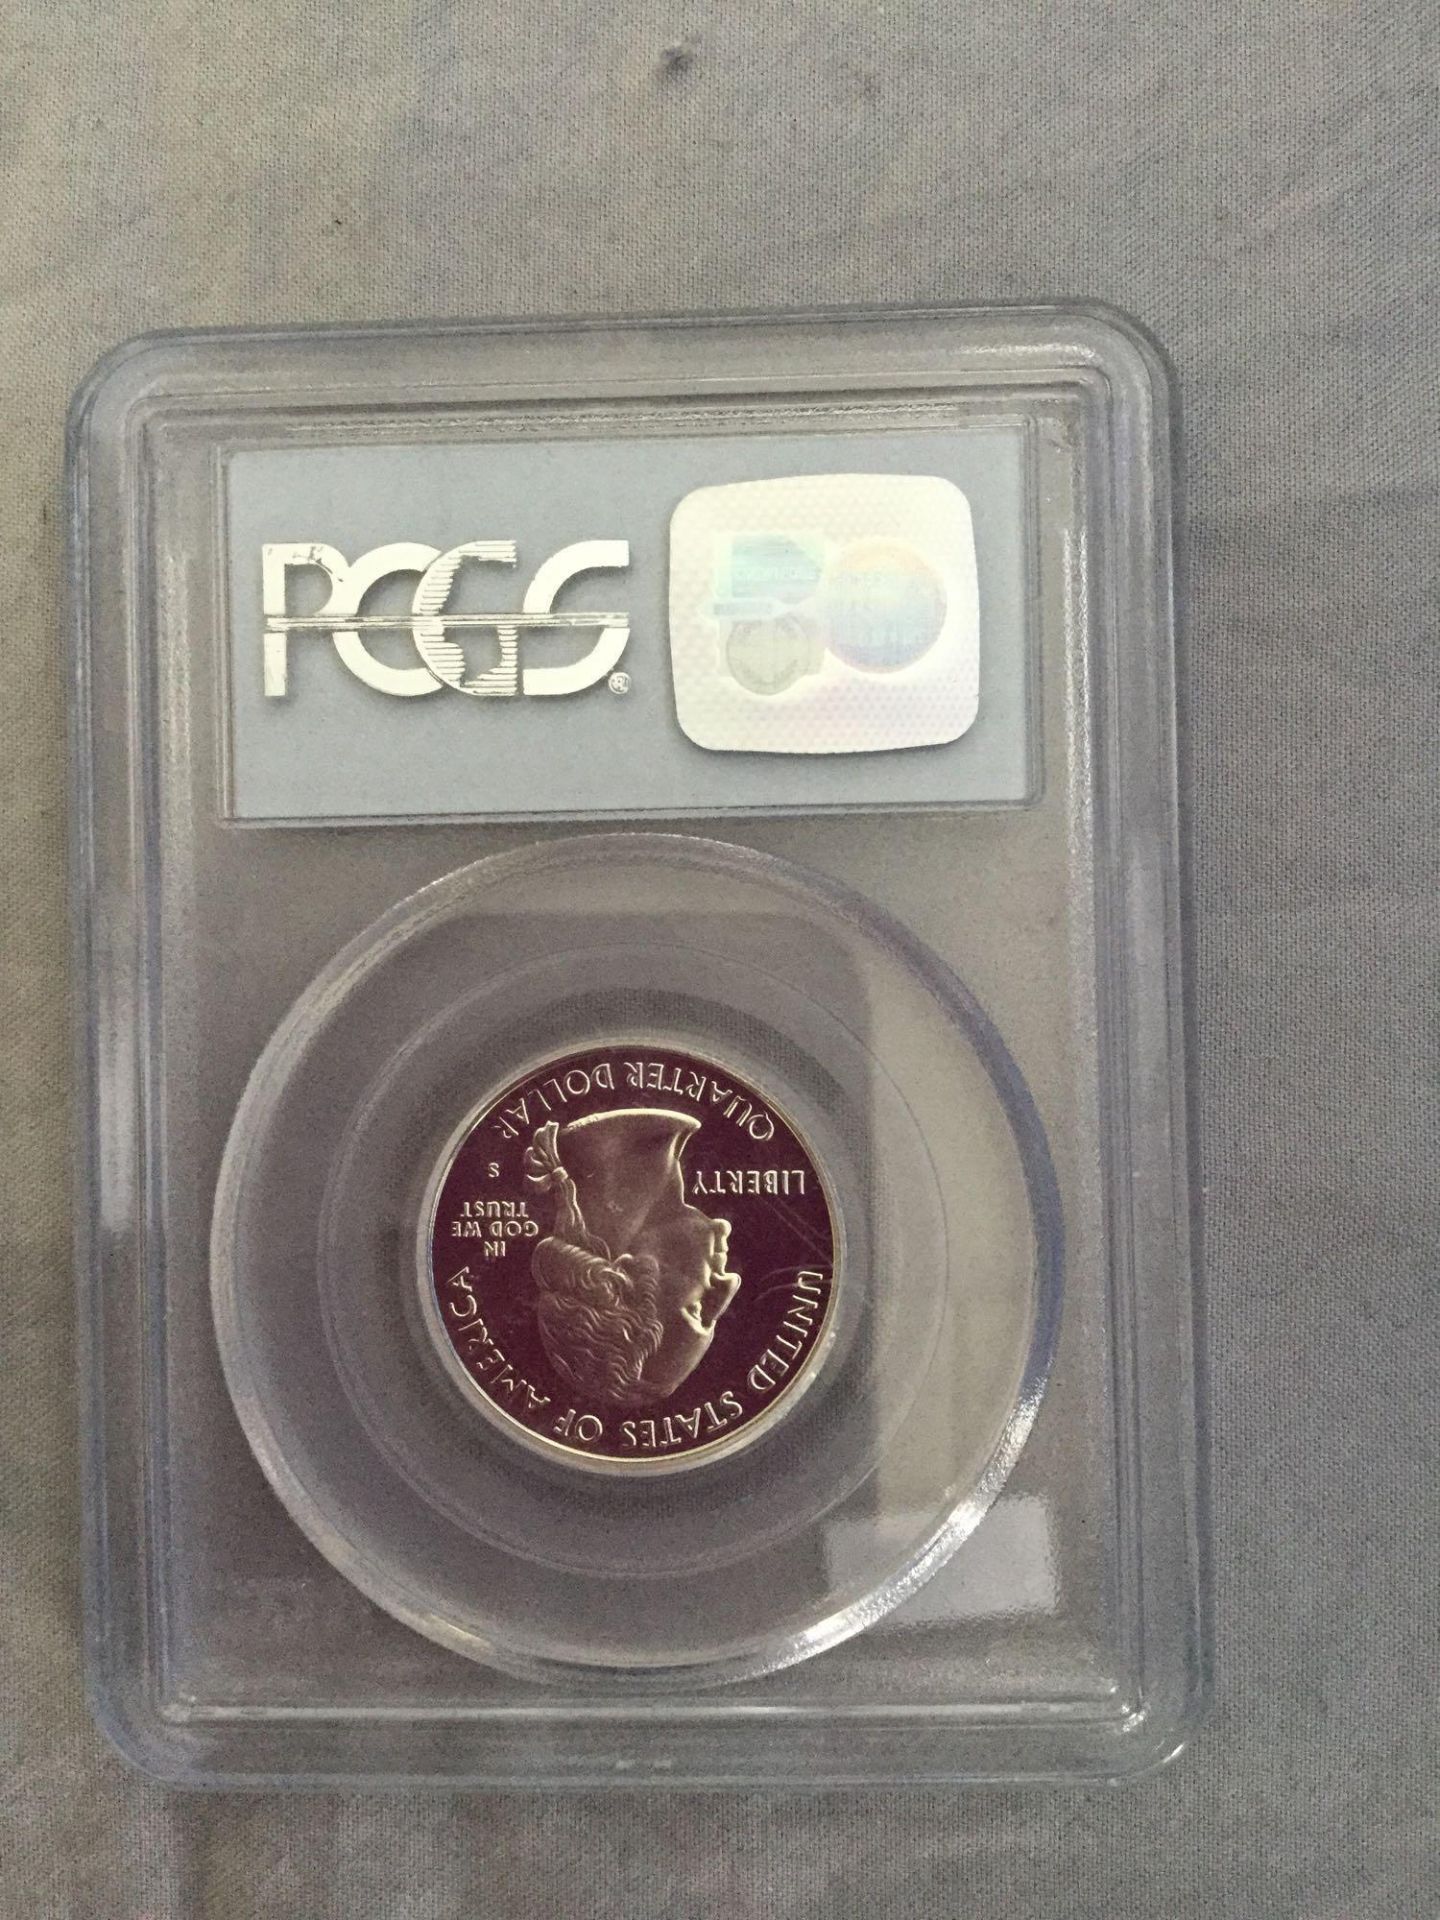 2001-S US 25 Cent Coin - PCGS PR69DCAM- N Carolina -Silver - Image 2 of 2